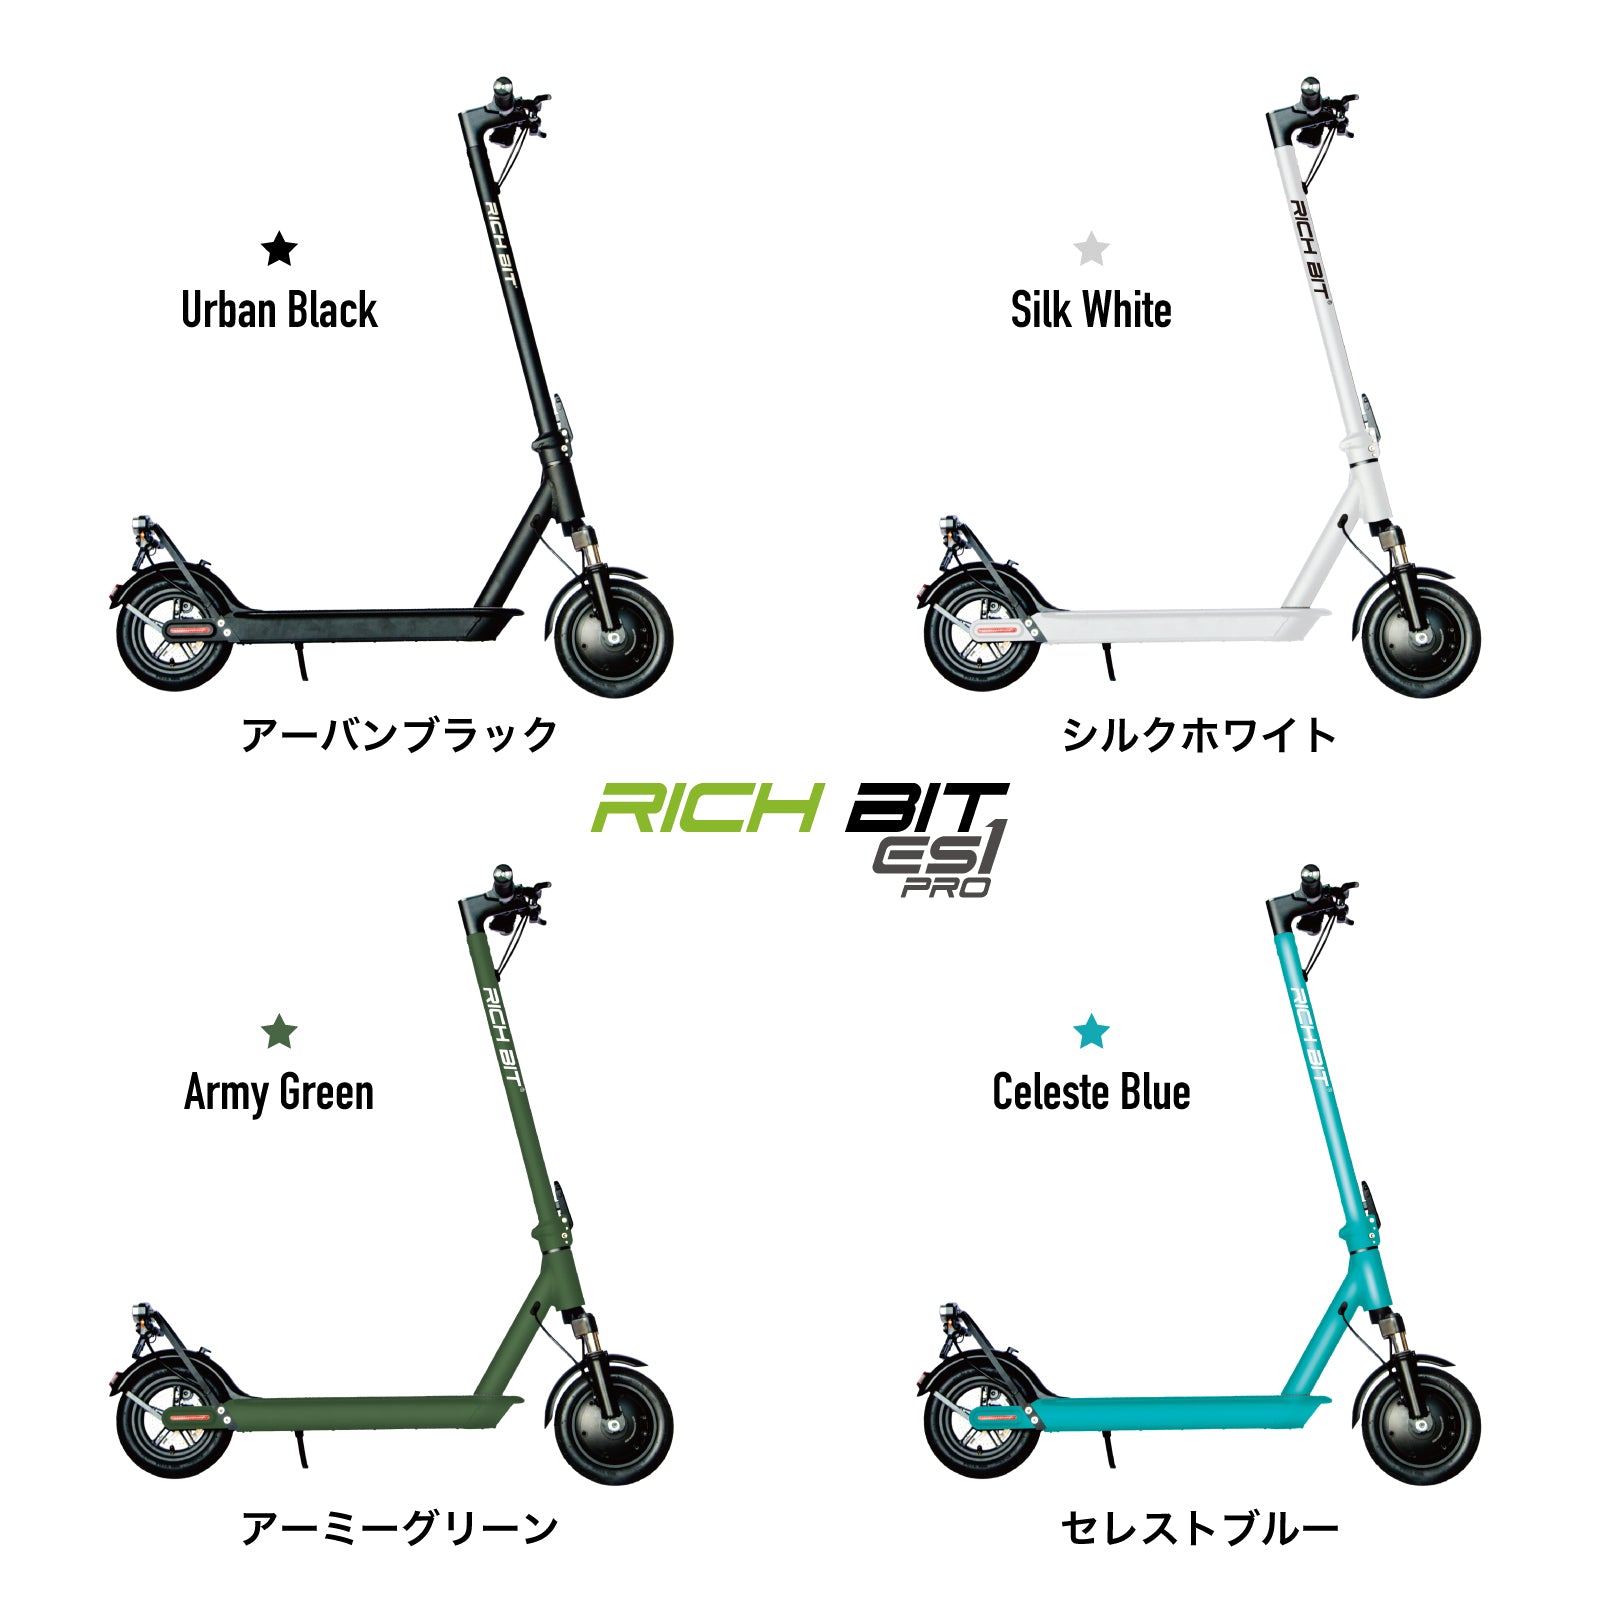 RICHBIT ES1 Pro ★特定小型原付 電動キックボード （免許不要・公道/歩道走行可能）全4色